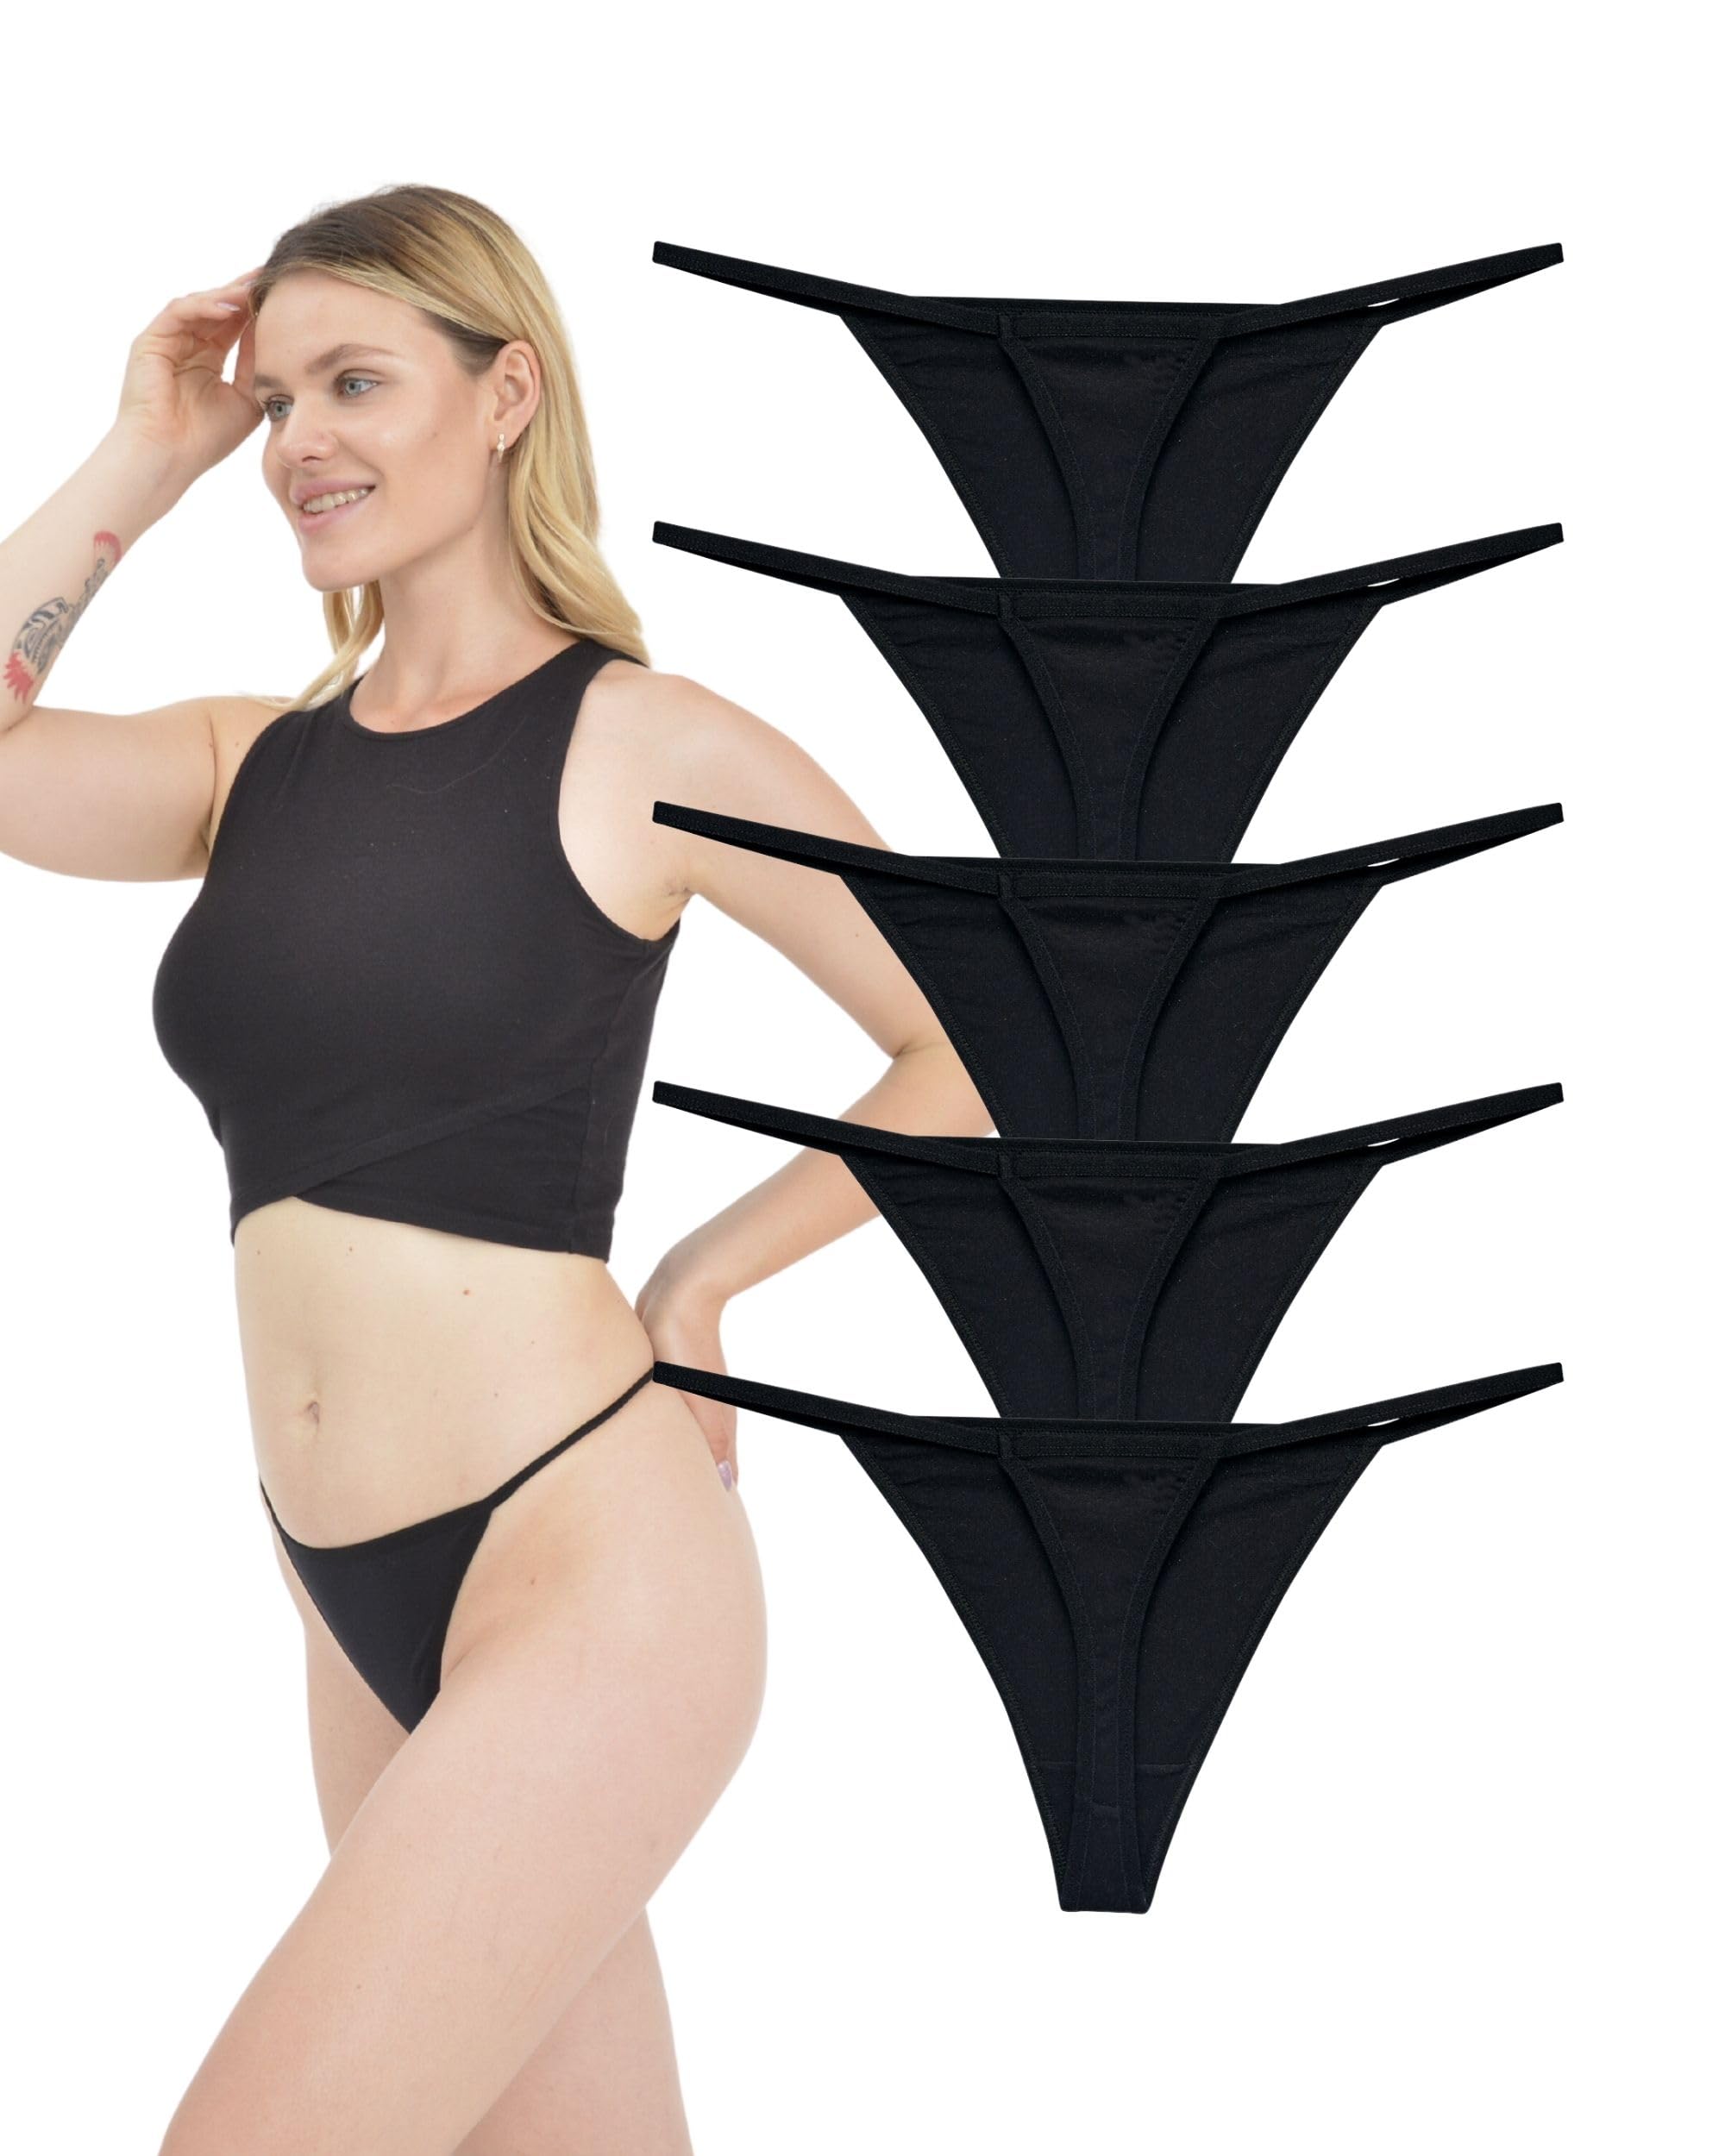 LadyMelex Women's G-string Cotton Black Thong, (S-M-L-XL) Underwear, Pack of 5